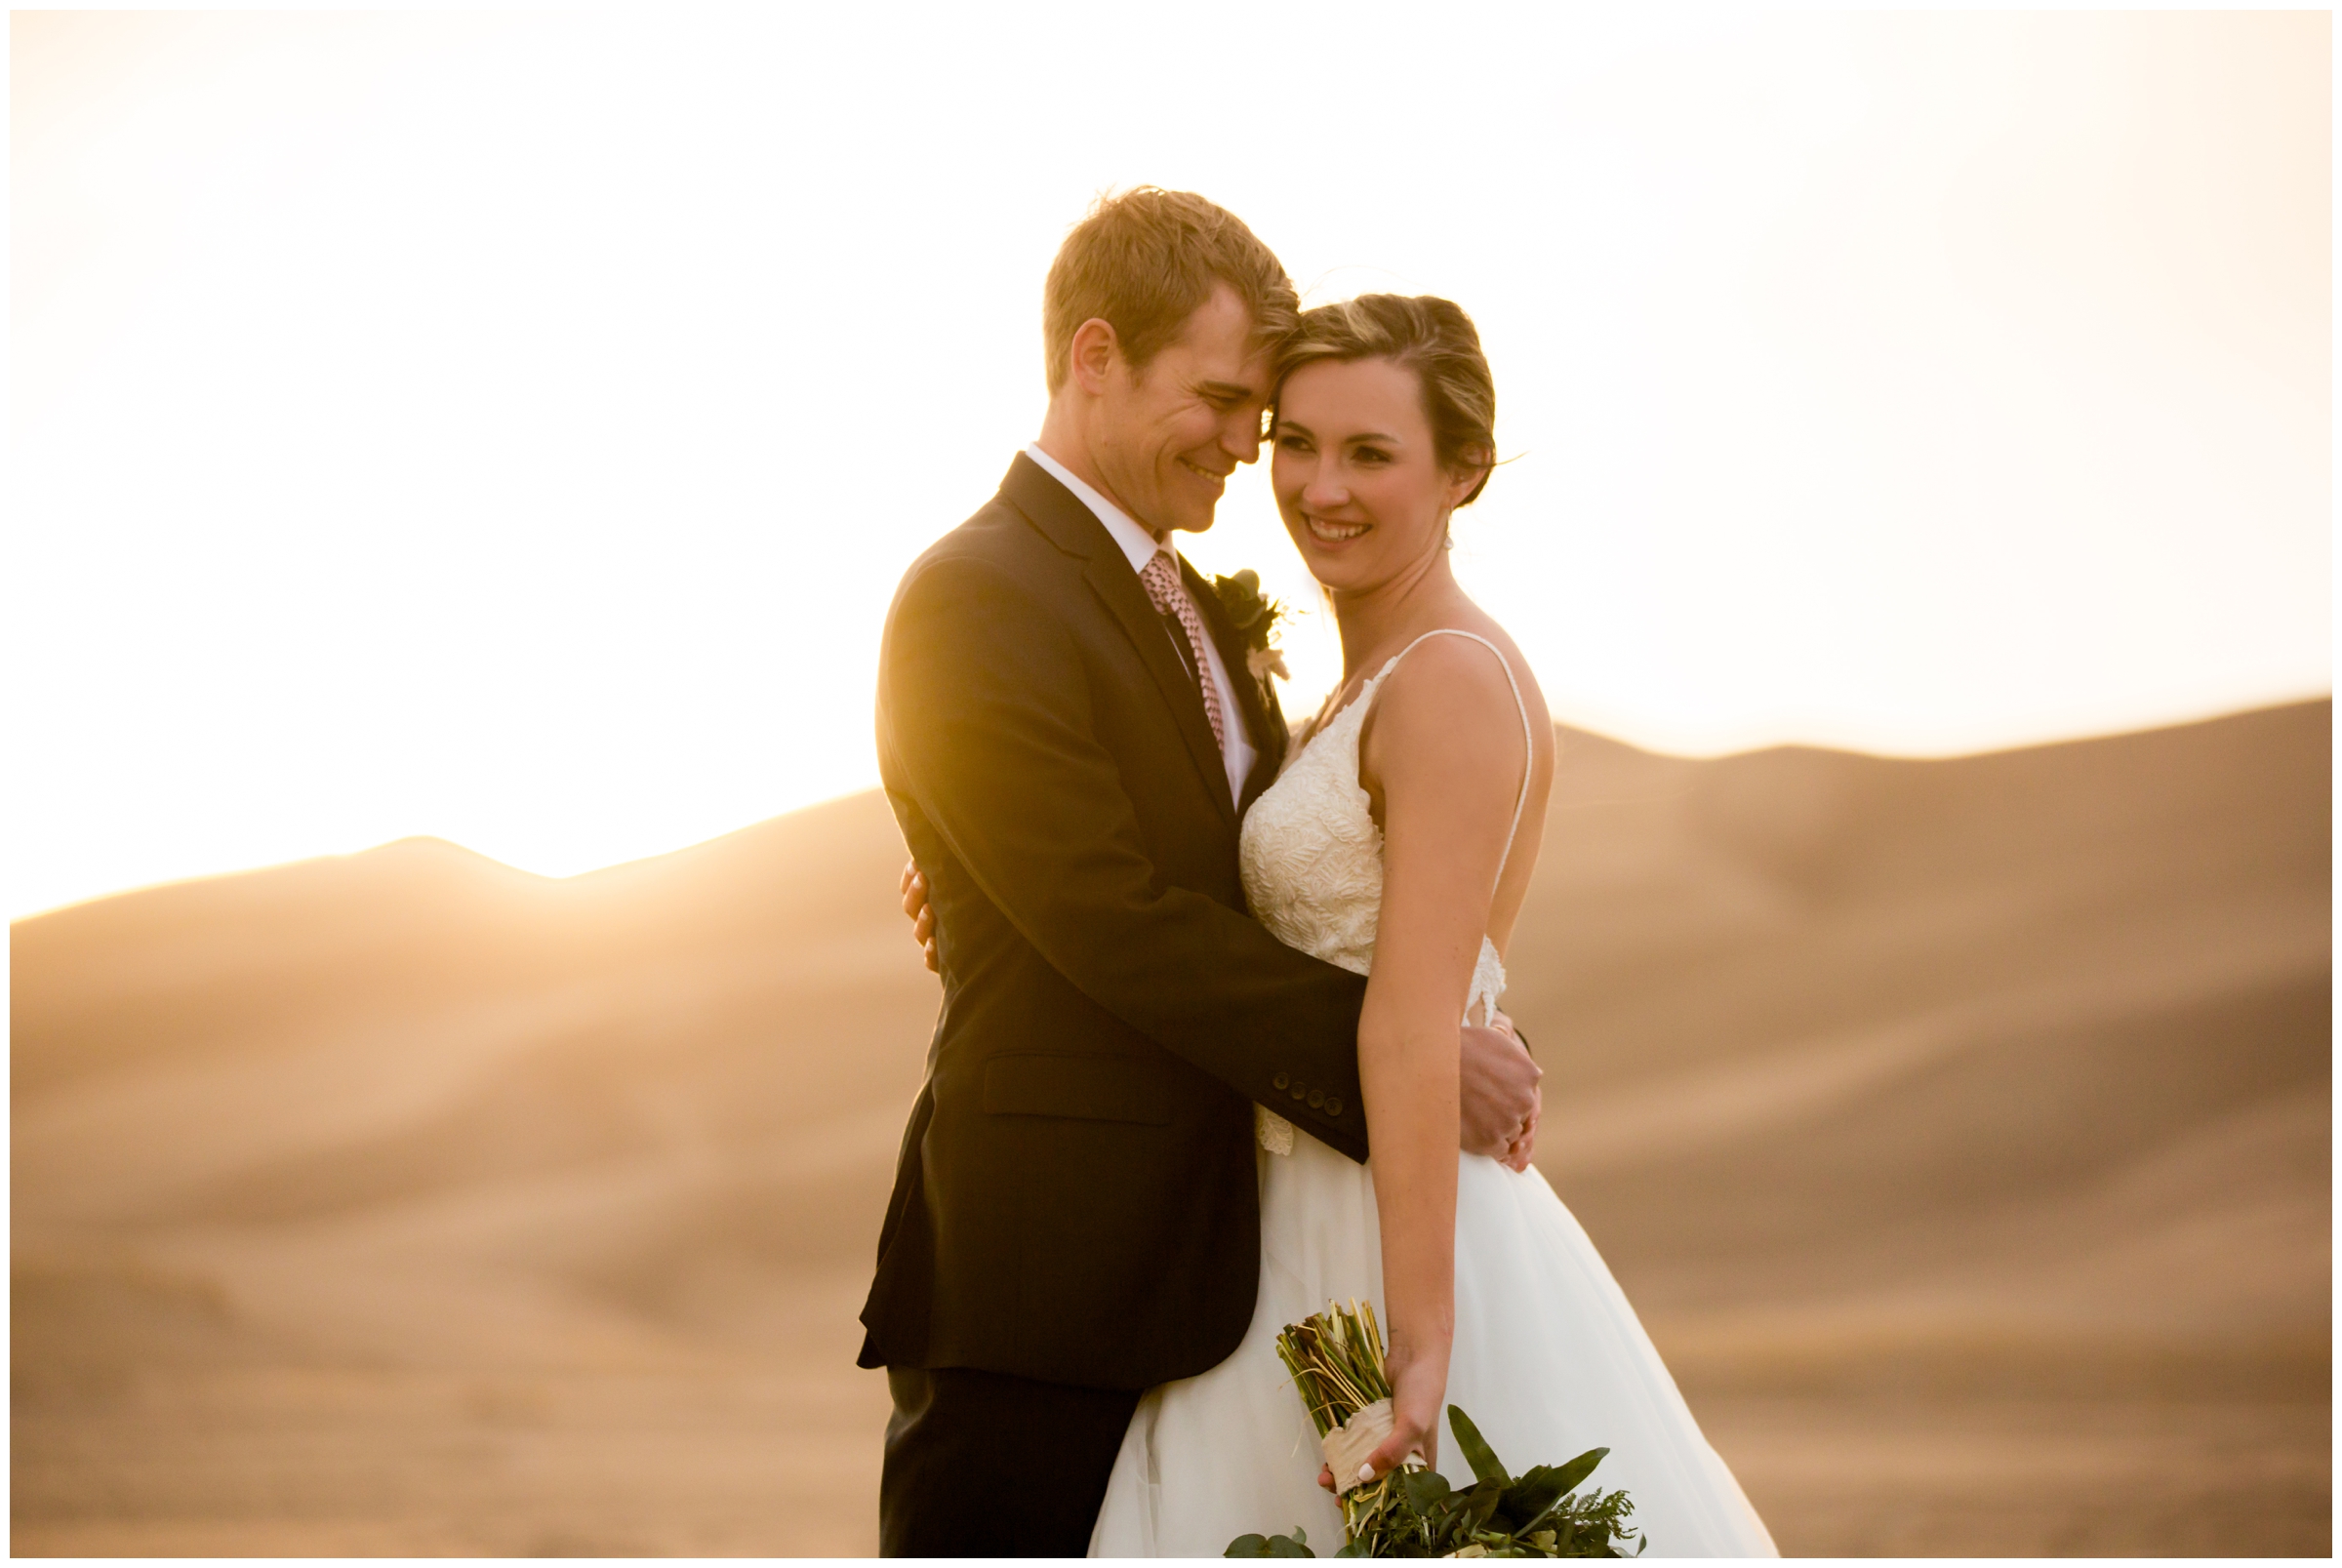 golden hour Colorado wedding photography inspiration in Alamosa CO